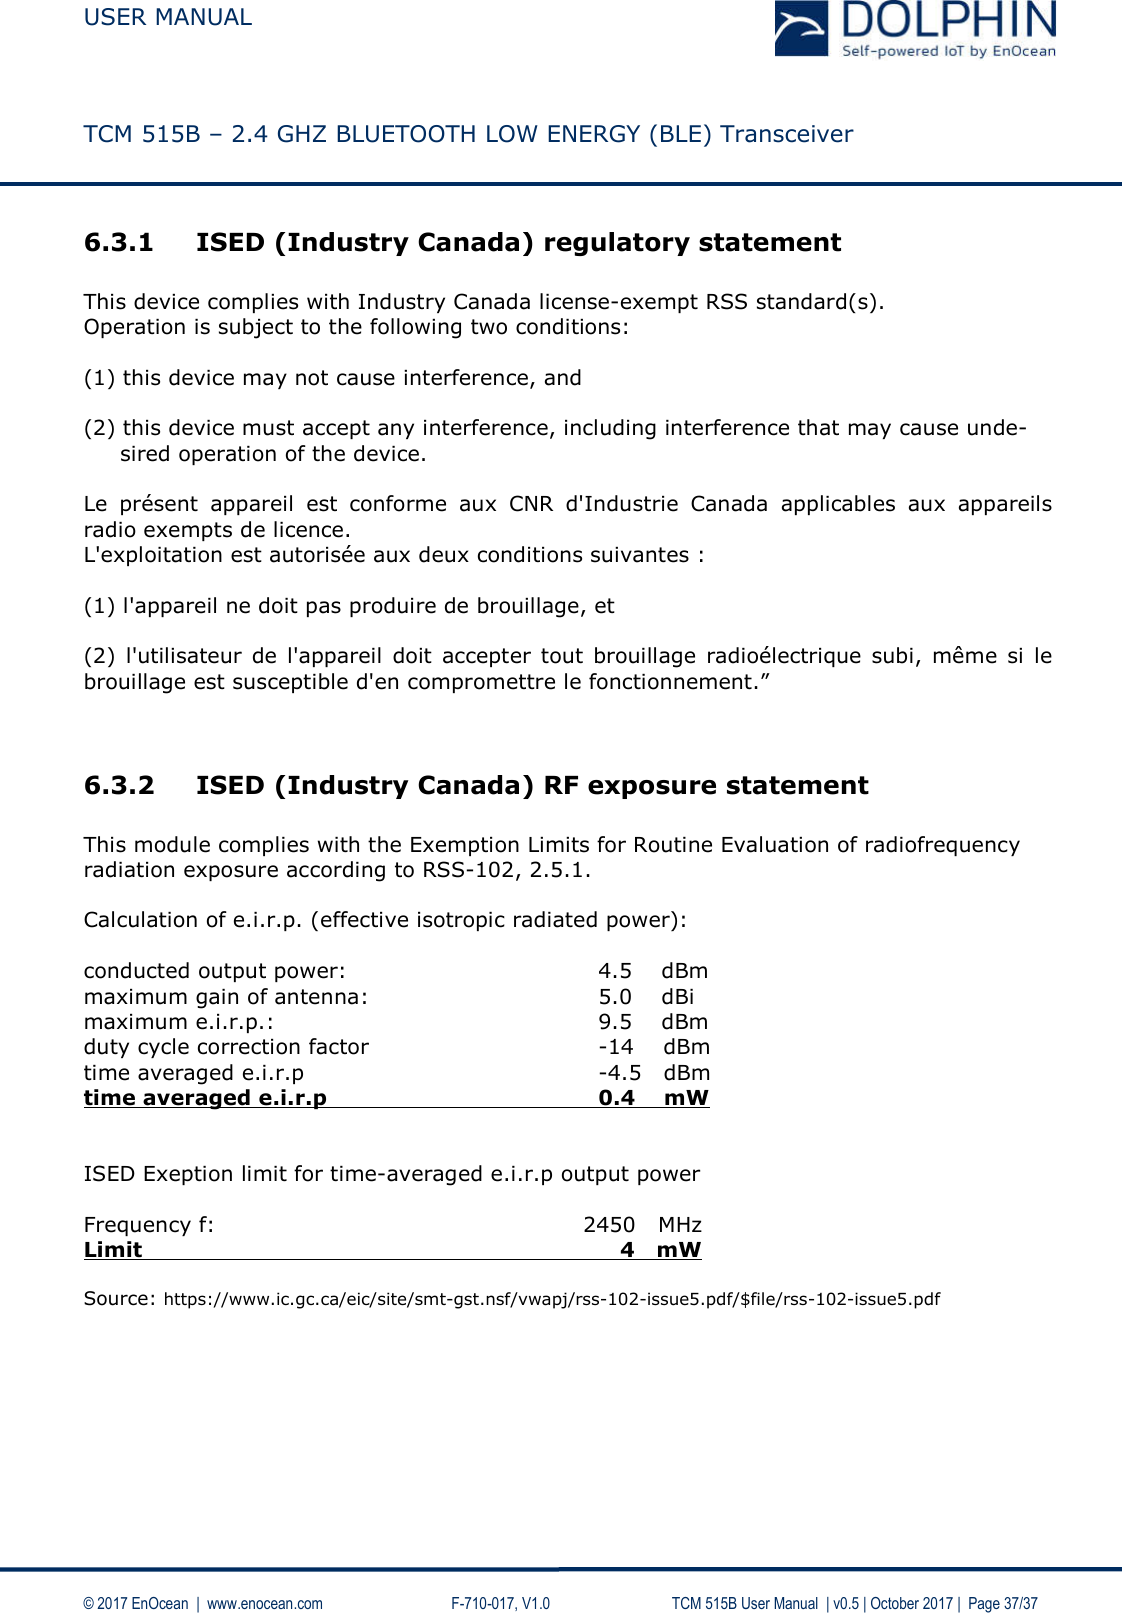  USER MANUAL    TCM 515B – 2.4 GHZ BLUETOOTH LOW ENERGY (BLE) Transceiver   © 2017 EnOcean  |  www.enocean.com     F-710-017, V1.0        TCM 515B User Manual  | v0.5 | October 2017 |  Page 37/37 6.3.1 ISED (Industry Canada) regulatory statement  This device complies with Industry Canada license-exempt RSS standard(s).  Operation is subject to the following two conditions:   (1) this device may not cause interference, and   (2) this device must accept any interference, including interference that may cause unde-         sired operation of the device.  Le  présent  appareil  est  conforme  aux  CNR  d&apos;Industrie  Canada  applicables  aux  appareils radio exempts de licence.  L&apos;exploitation est autorisée aux deux conditions suivantes :   (1) l&apos;appareil ne doit pas produire de brouillage, et   (2)  l&apos;utilisateur de  l&apos;appareil  doit  accepter  tout brouillage  radioélectrique subi, même si  le brouillage est susceptible d&apos;en compromettre le fonctionnement.”   6.3.2 ISED (Industry Canada) RF exposure statement  This module complies with the Exemption Limits for Routine Evaluation of radiofrequency radiation exposure according to RSS-102, 2.5.1.  Calculation of e.i.r.p. (effective isotropic radiated power):  conducted output power:        4.5    dBm maximum gain of antenna:       5.0    dBi maximum e.i.r.p.:          9.5    dBm duty cycle correction factor       -14    dBm time averaged e.i.r.p        -4.5   dBm time averaged e.i.r.p    0.4    mW   ISED Exeption limit for time-averaged e.i.r.p output power  Frequency f:                  2450   MHz Limit                 4   mW  Source: https://www.ic.gc.ca/eic/site/smt-gst.nsf/vwapj/rss-102-issue5.pdf/$file/rss-102-issue5.pdf  